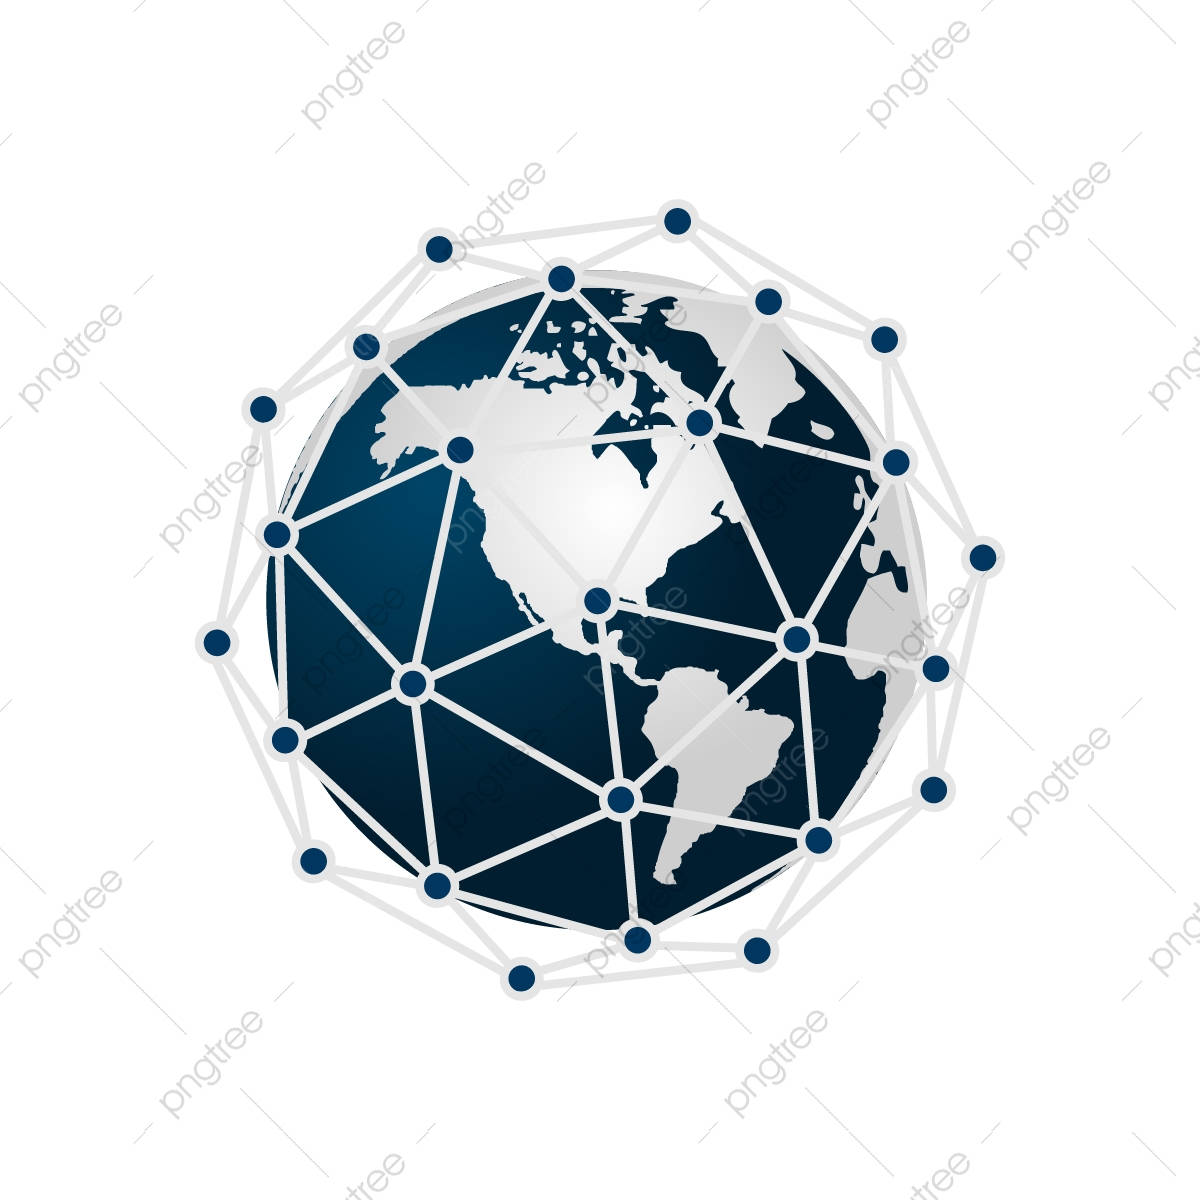 Globalconnect Sphere Wallpaper